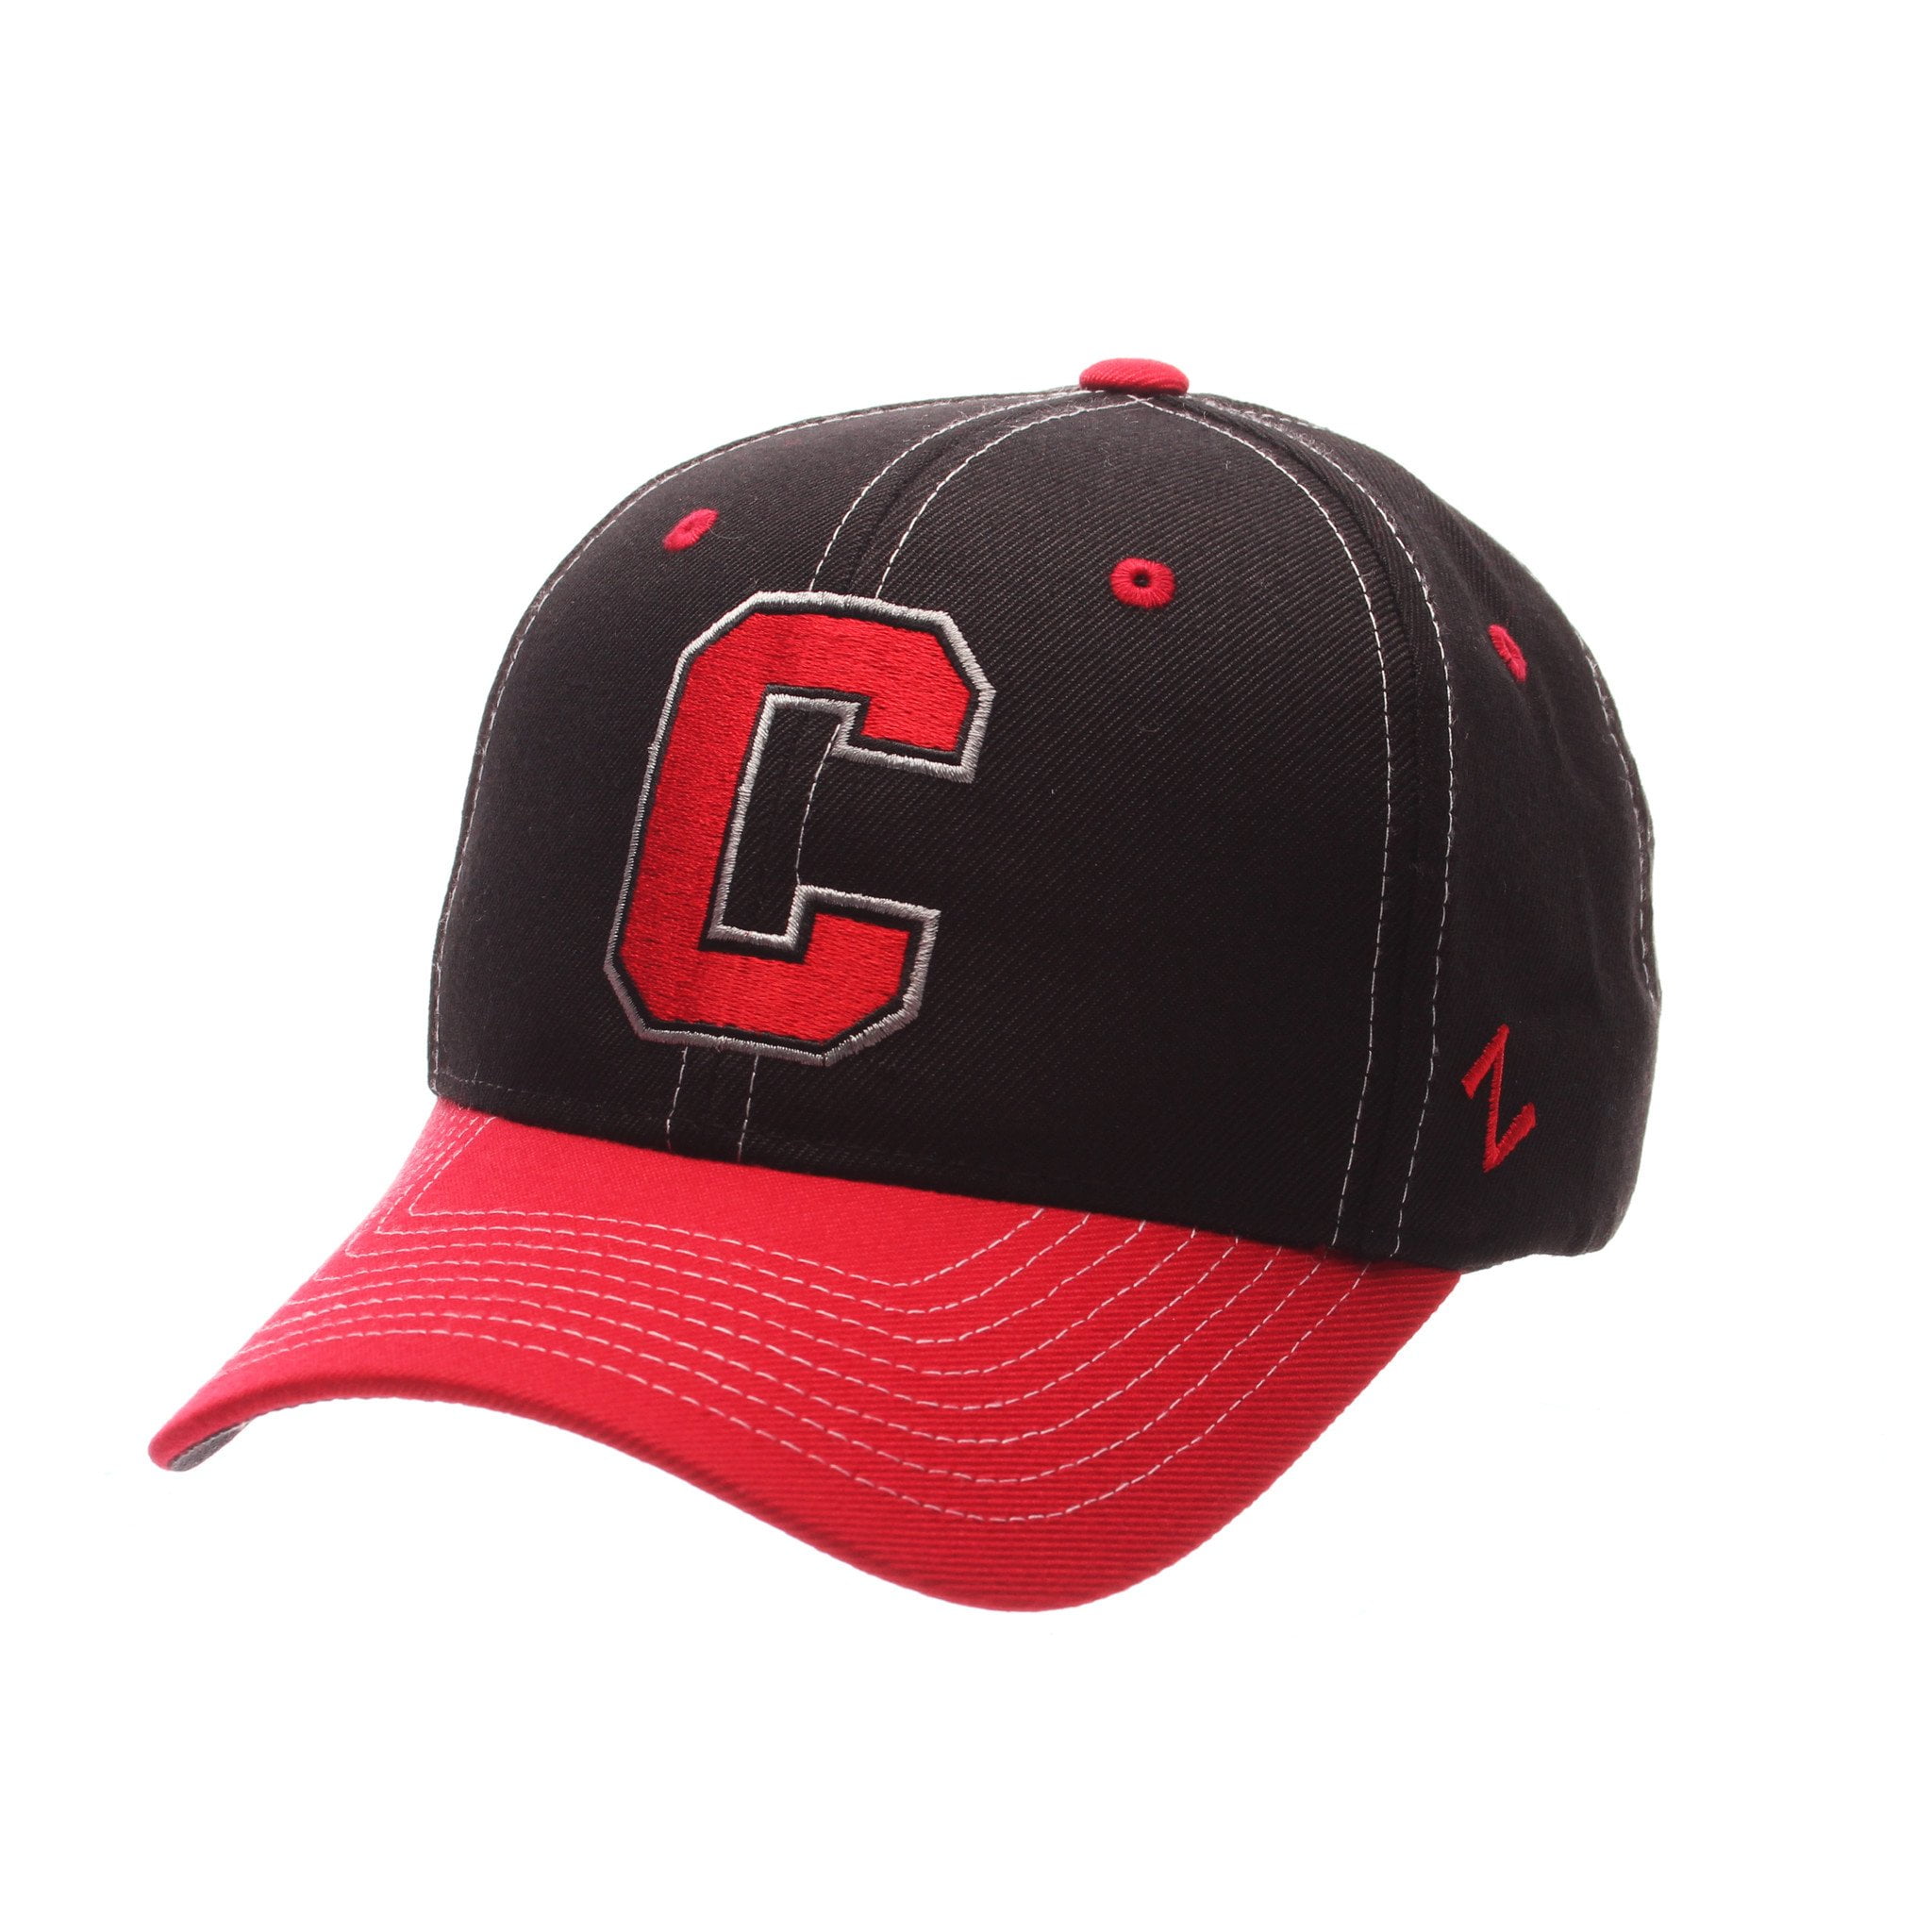 Louisville Cardinals Official NCAA Adjustable Hat Cap by Zephyr 